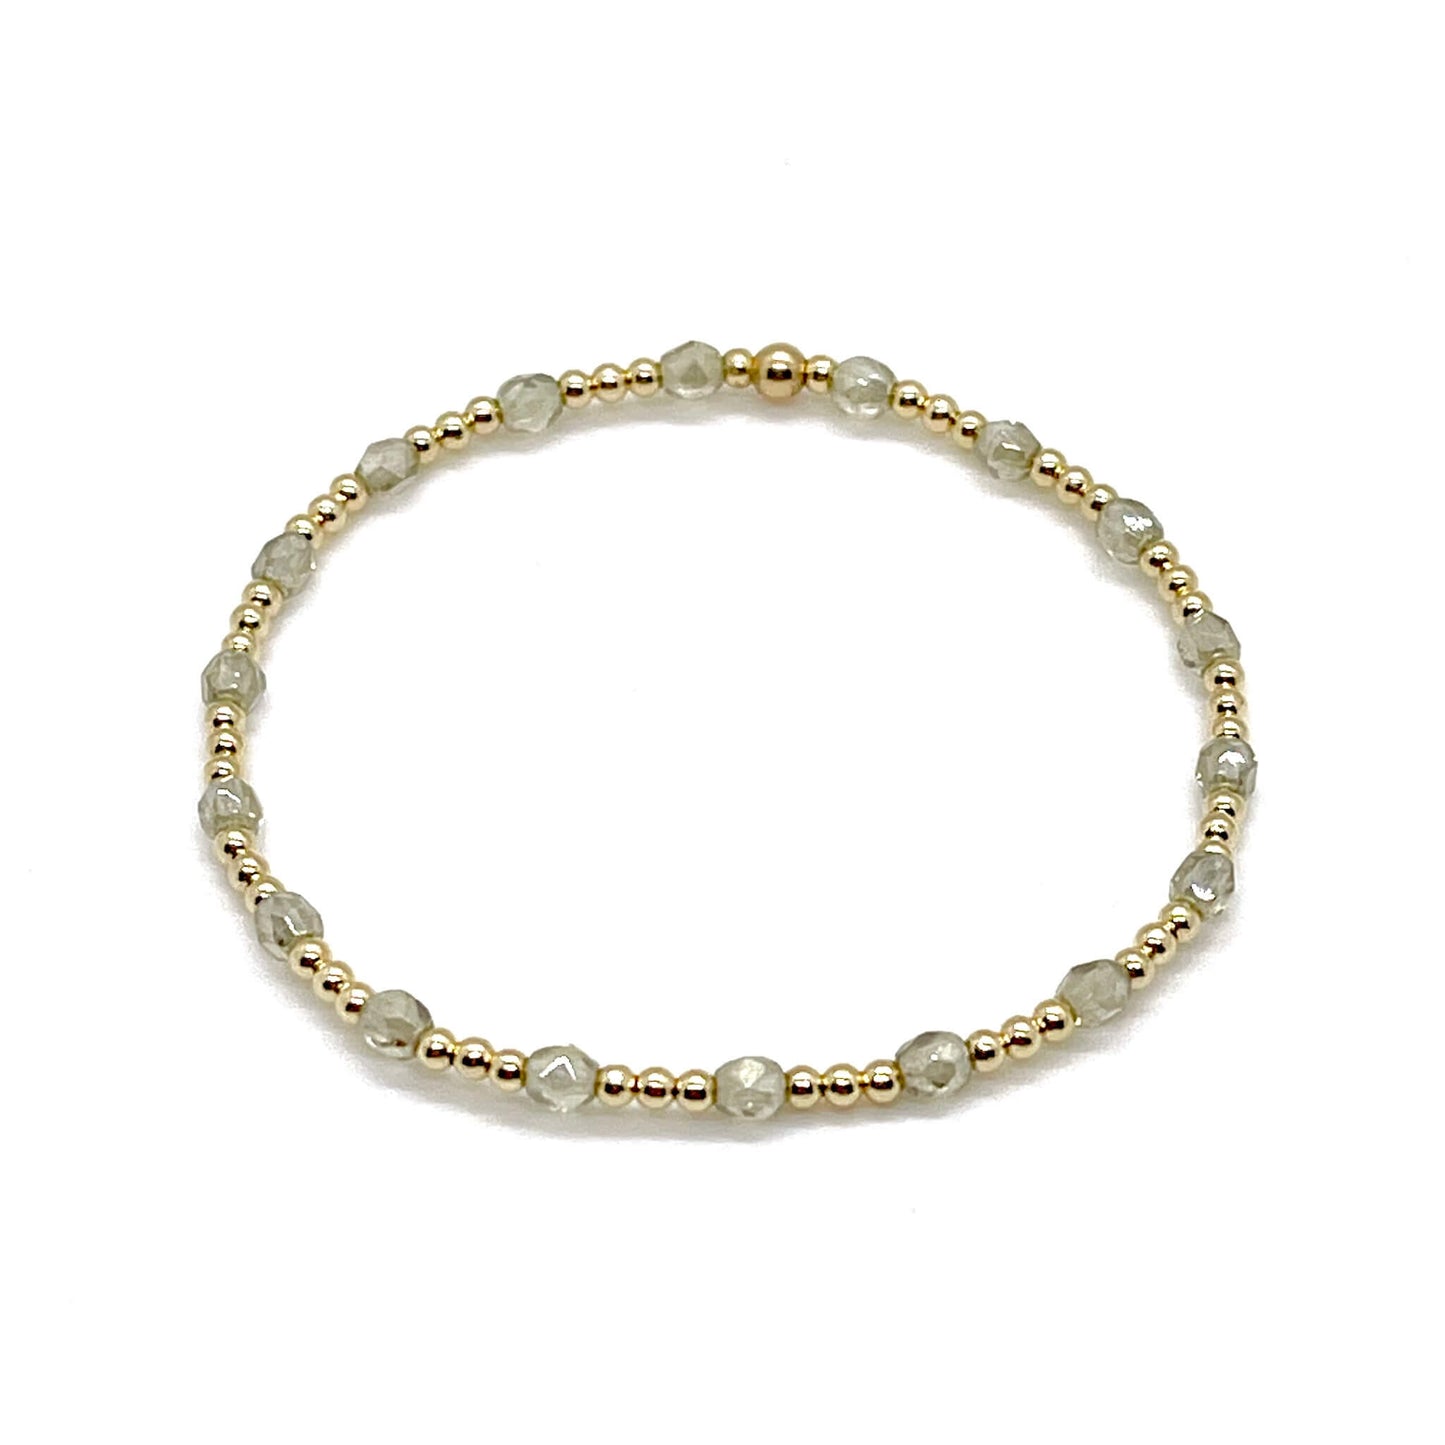 Grey-taupe crystal bracelet with small gold beads. Dainty womens stretch bracelet.